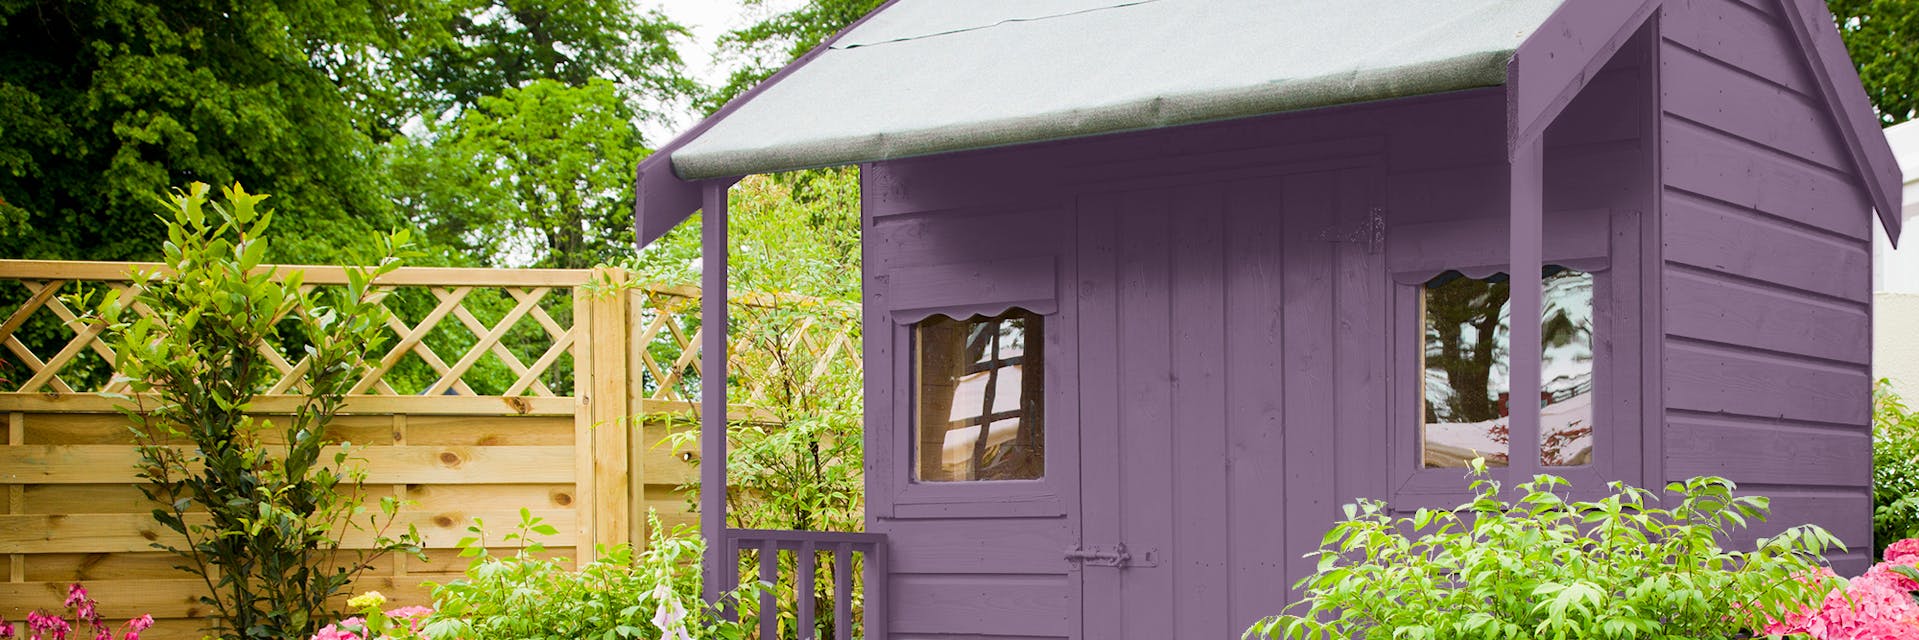 Purple shed